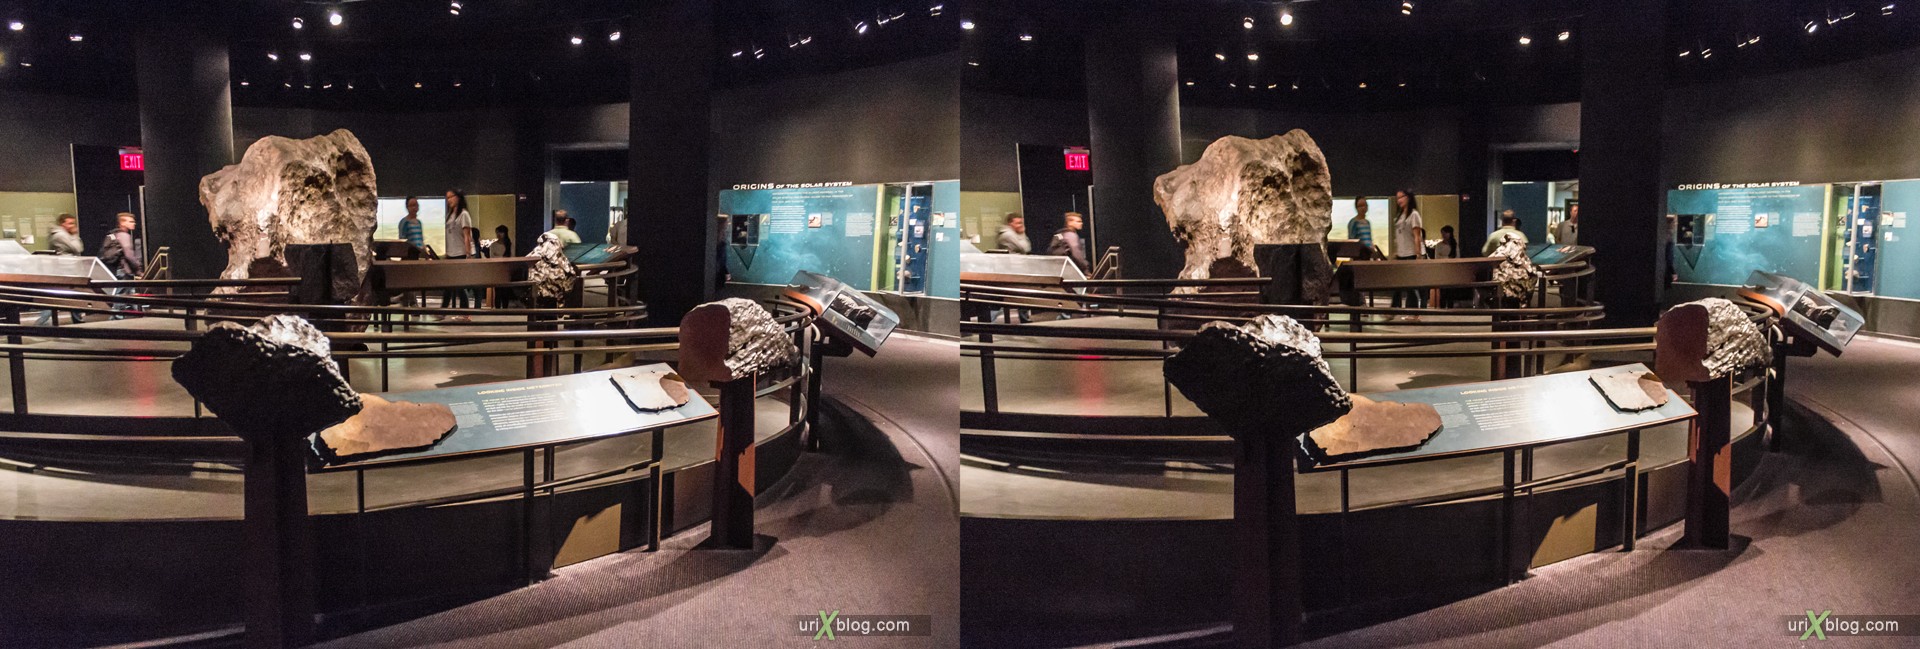 2013, American Museum of Natural History, NYC, New York City, USA, animal, dinosaur, skeleton, 3D, stereo pair, cross-eyed, crossview, cross view stereo pair, stereoscopic